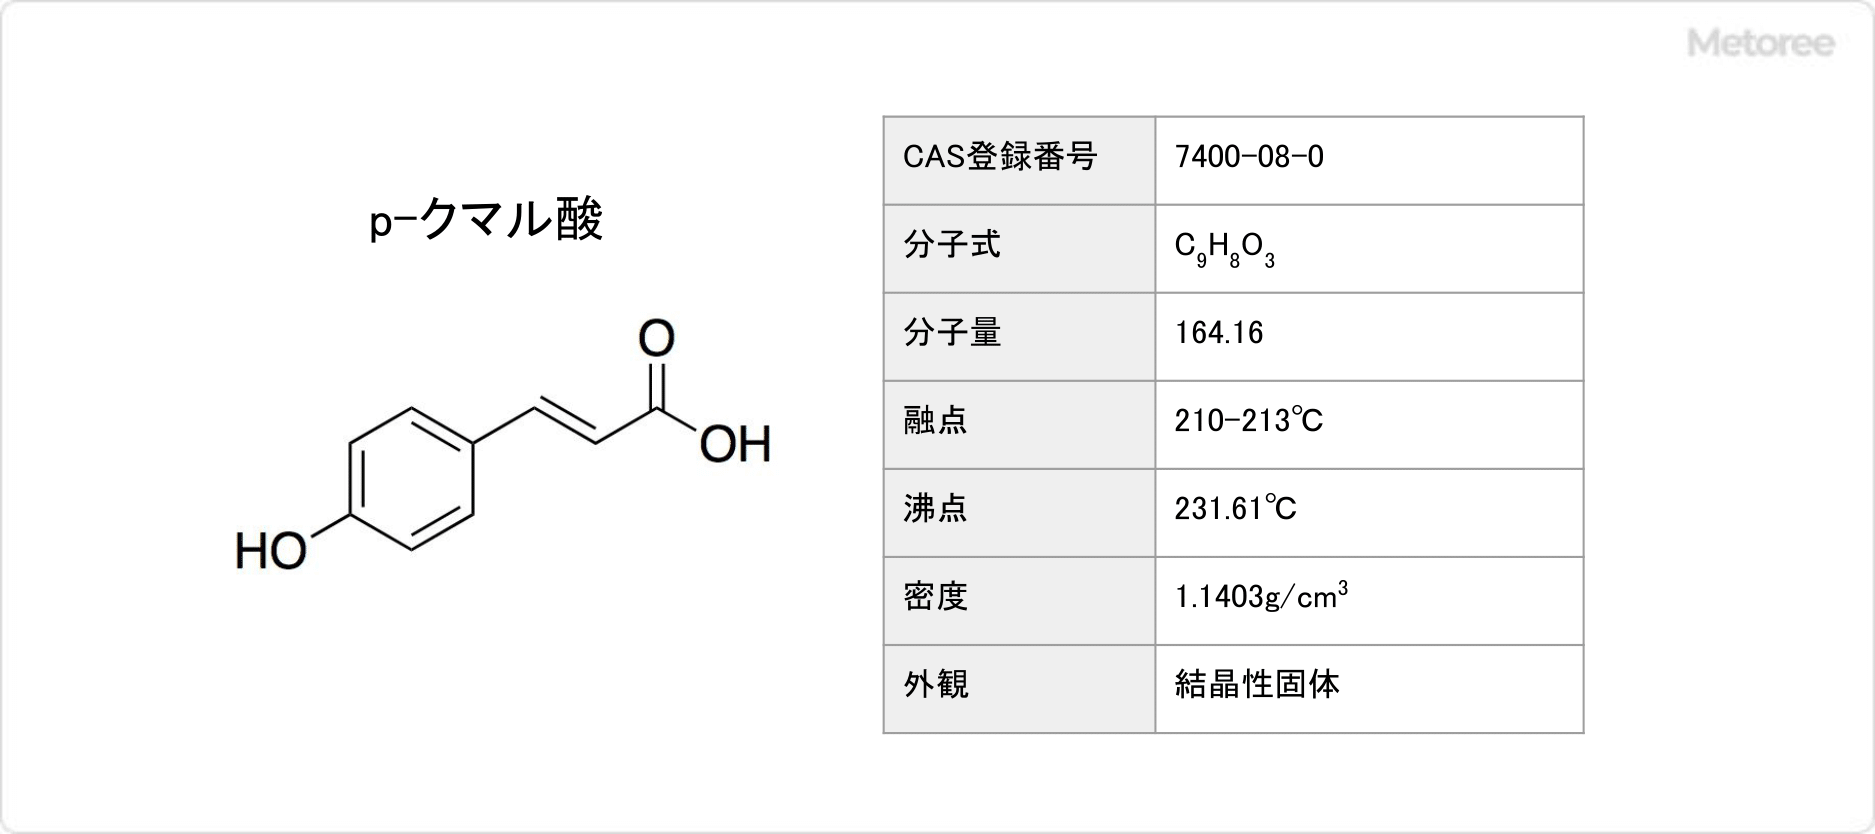 p-クマル酸の基本情報